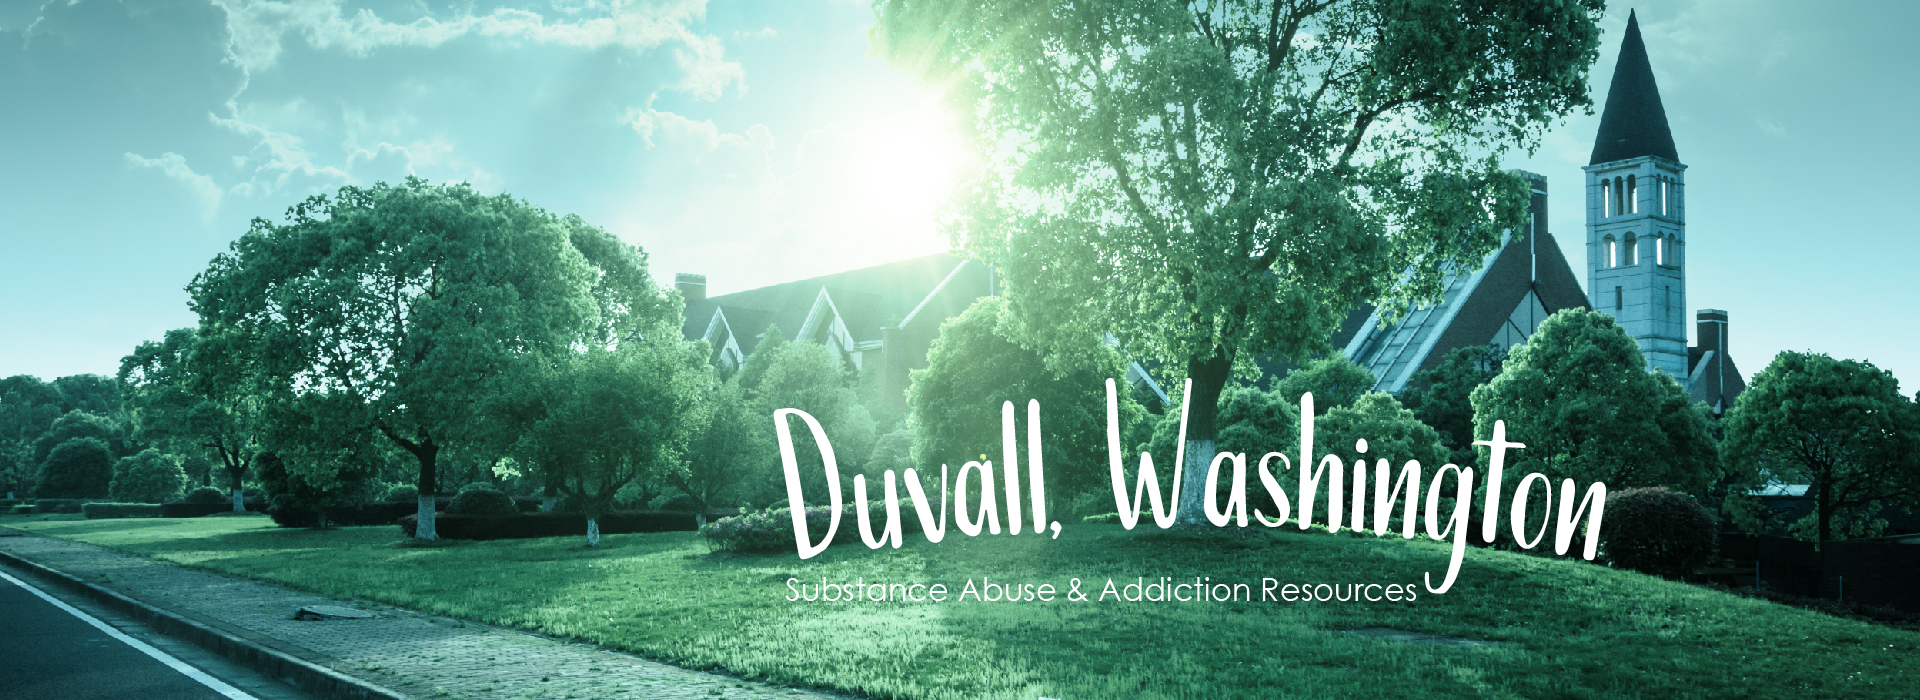 Duvall, Washington Addiction Resources